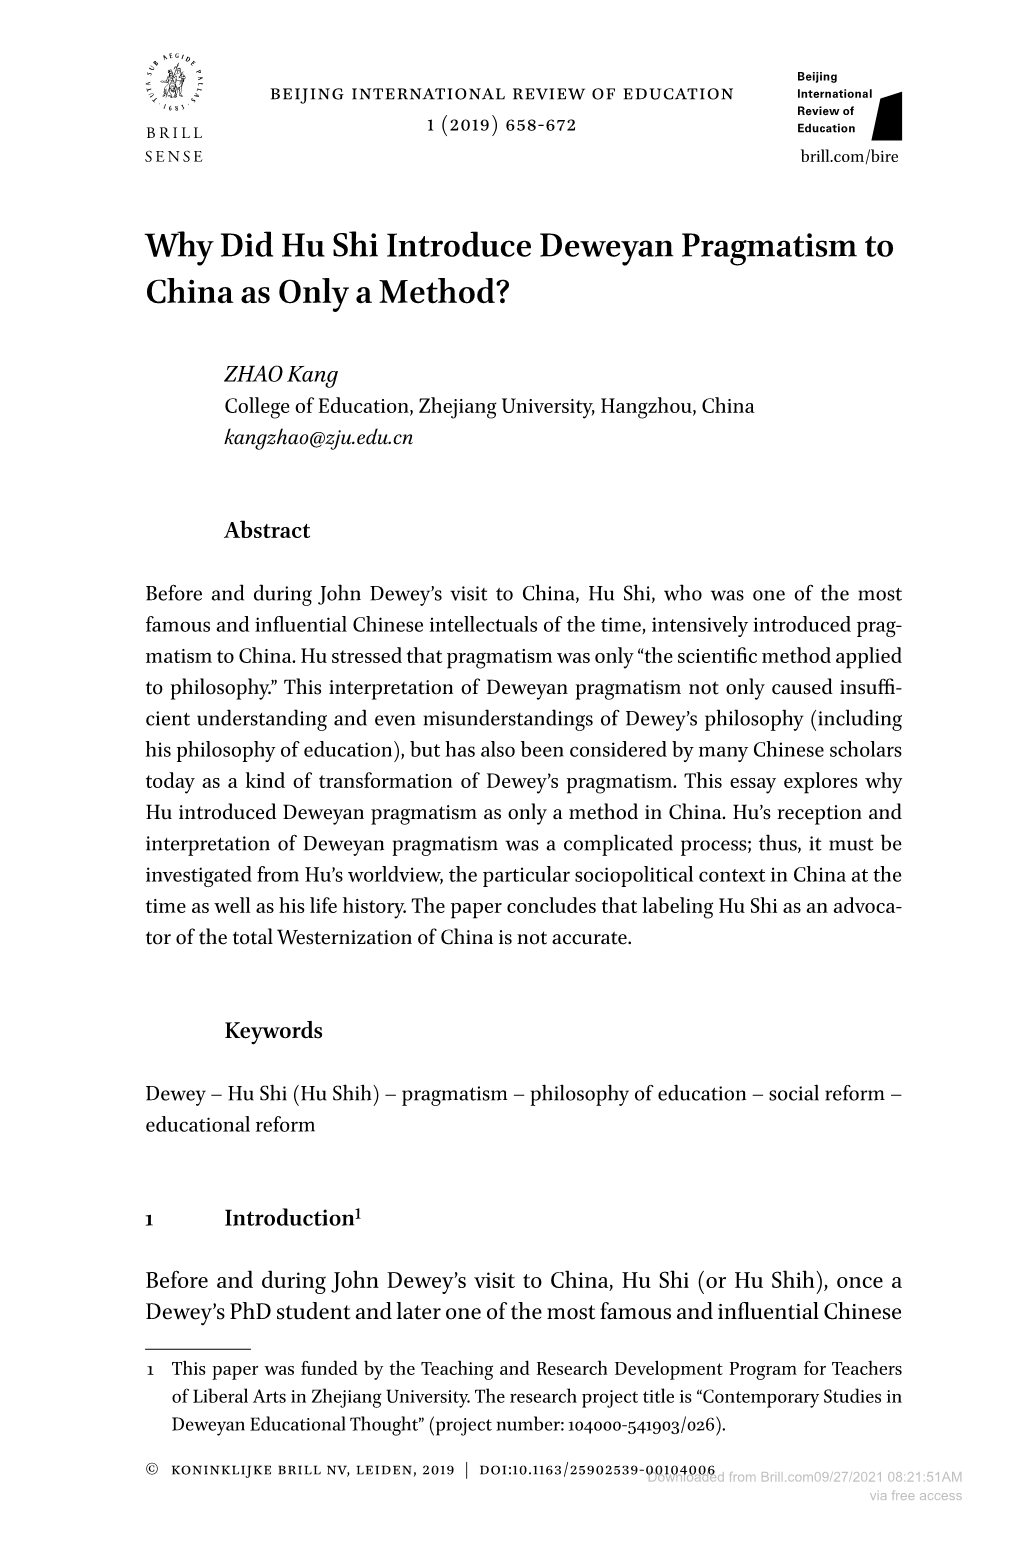 Why Did Hu Shi Introduce Deweyan Pragmatism to China As Only a Method?